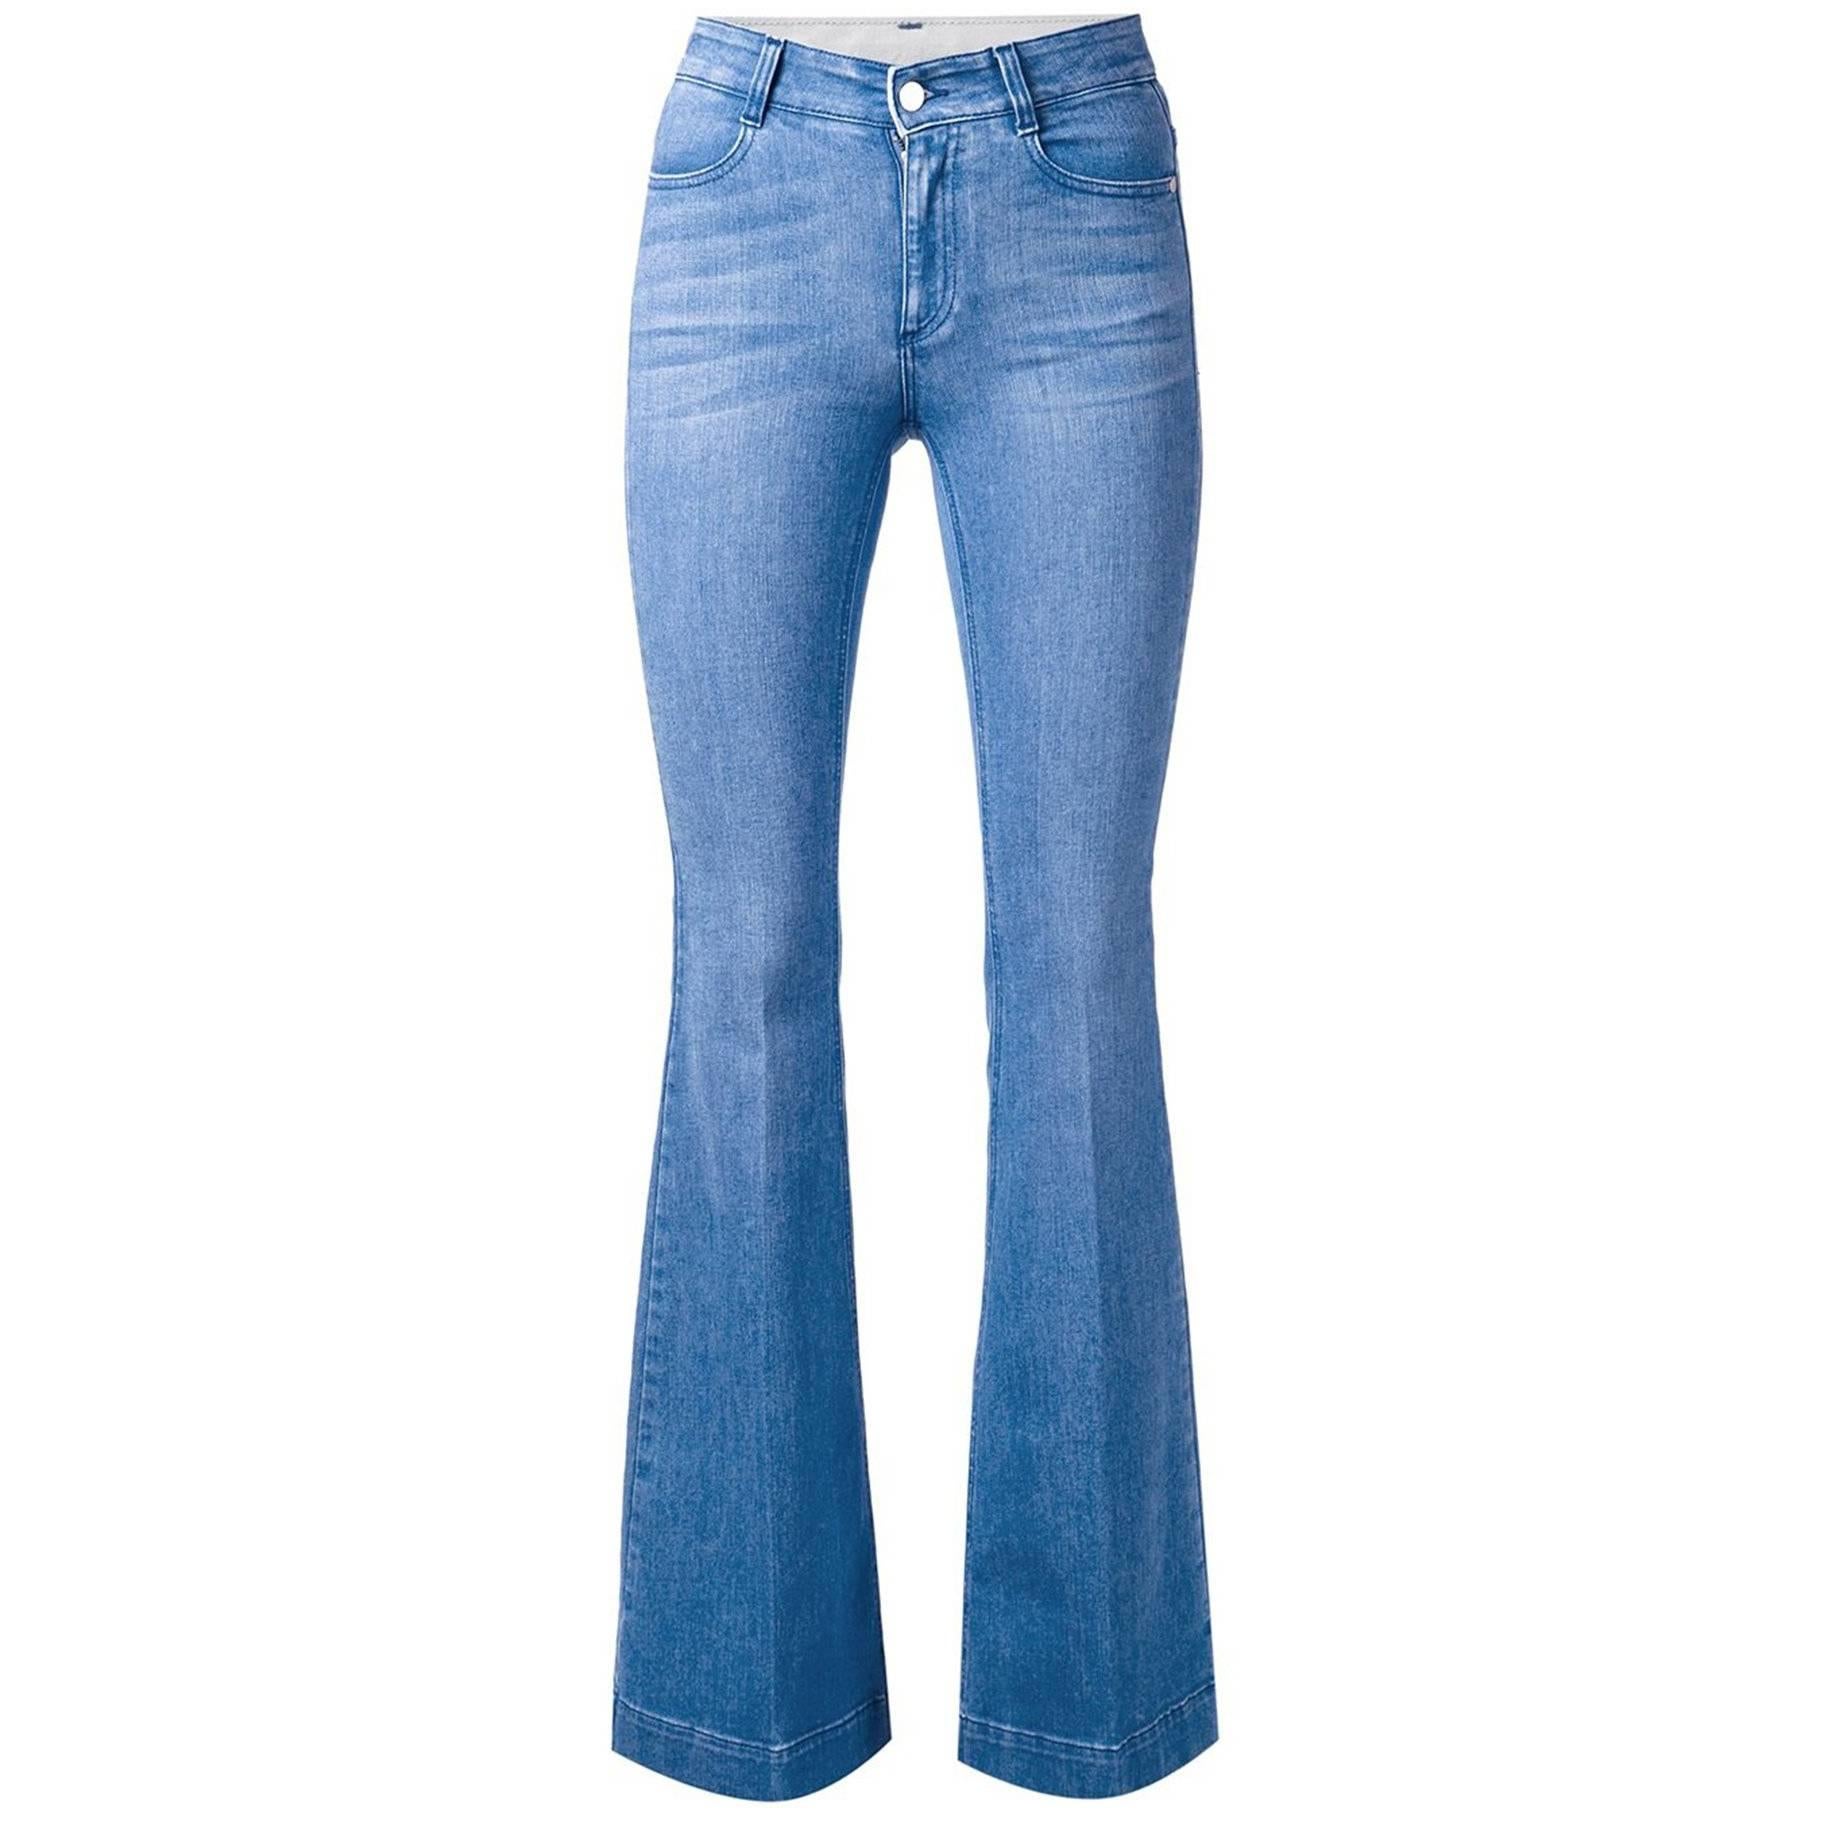 Stella McCartney Blue Flare Jeans Sz 29 